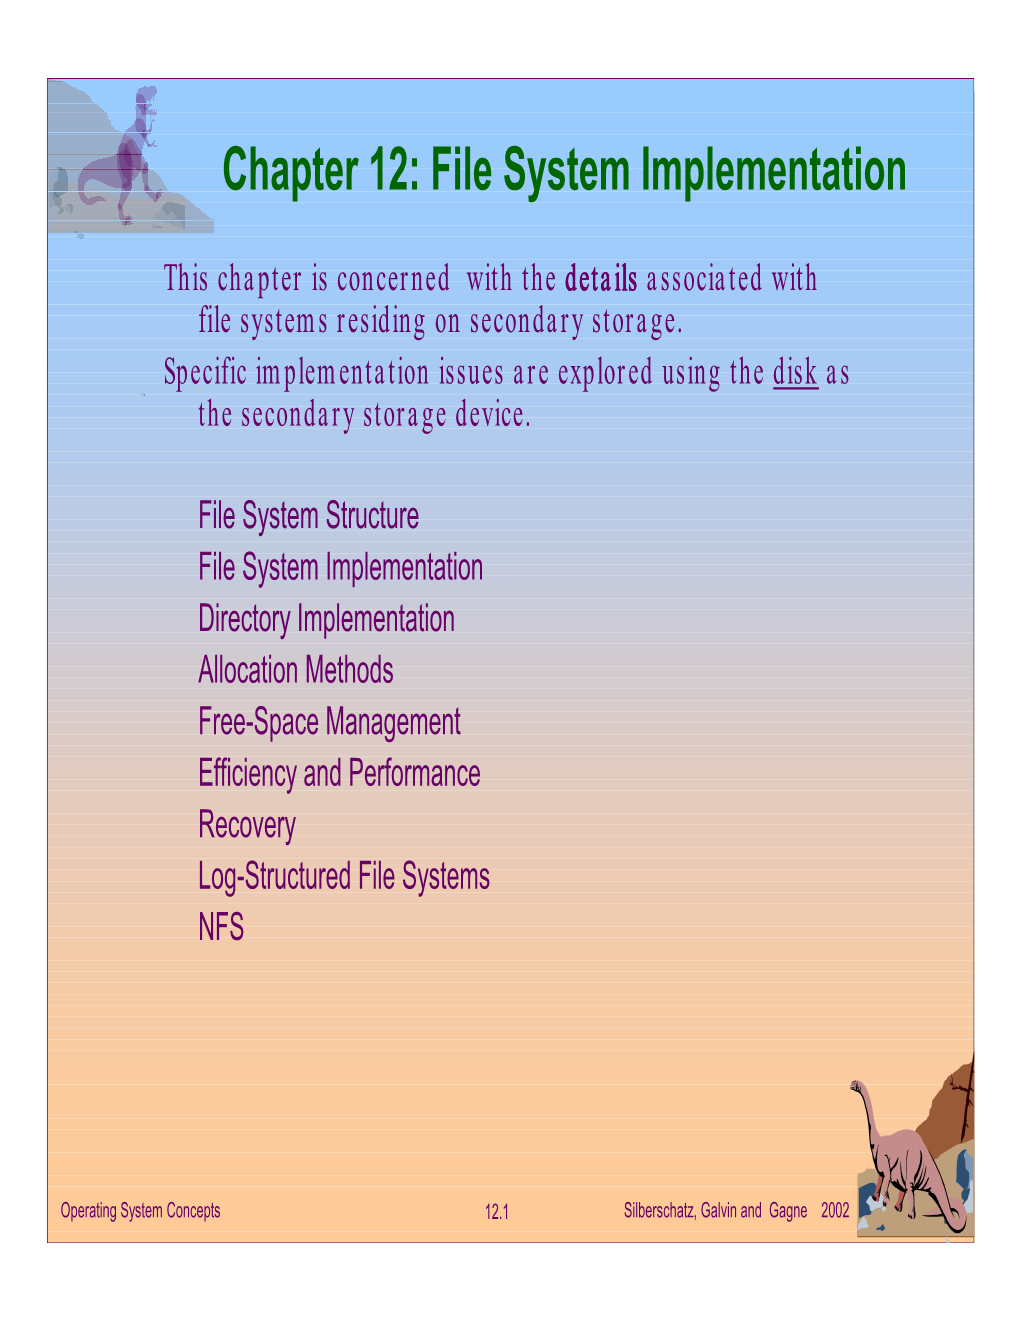 Chapter 12: File System Implementation